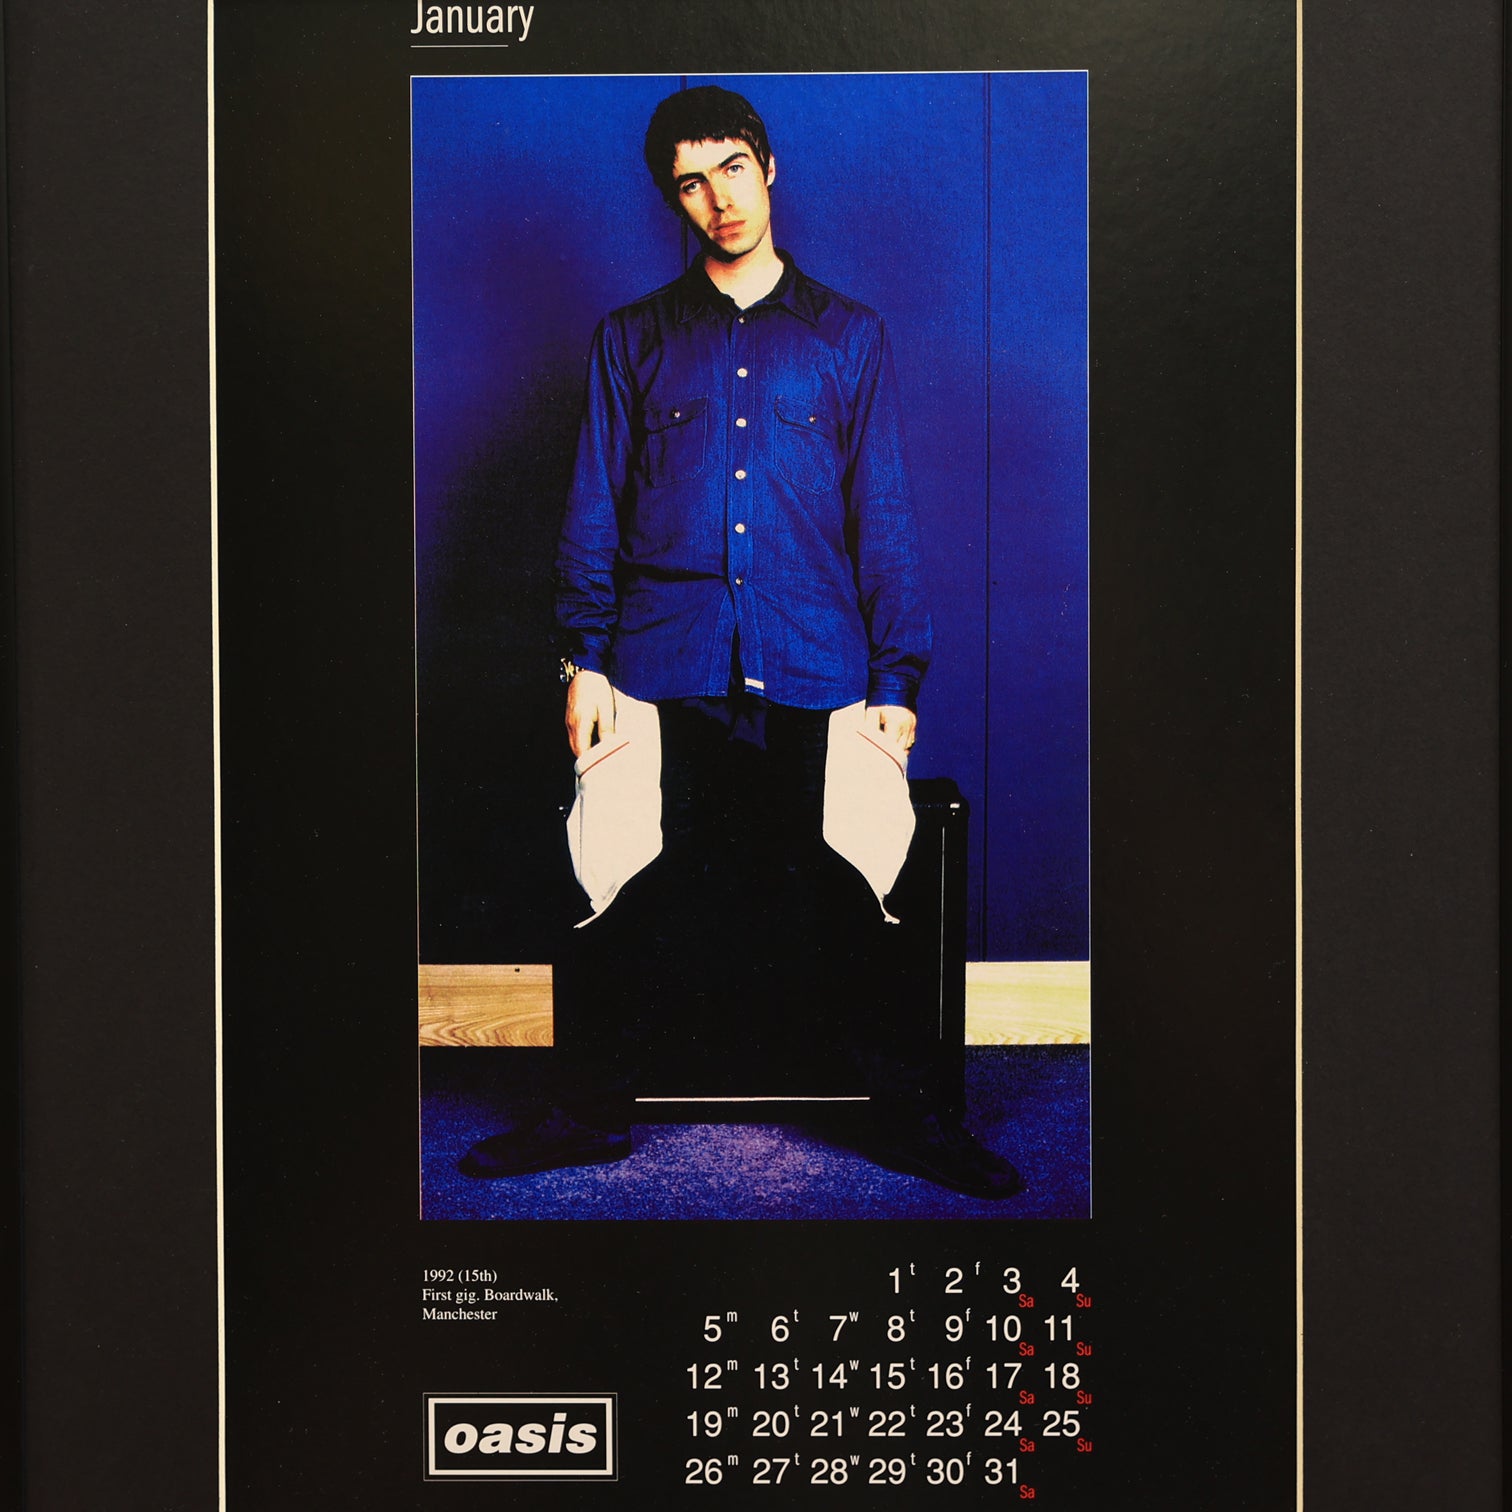 Oasis - January Personalised Calendar.